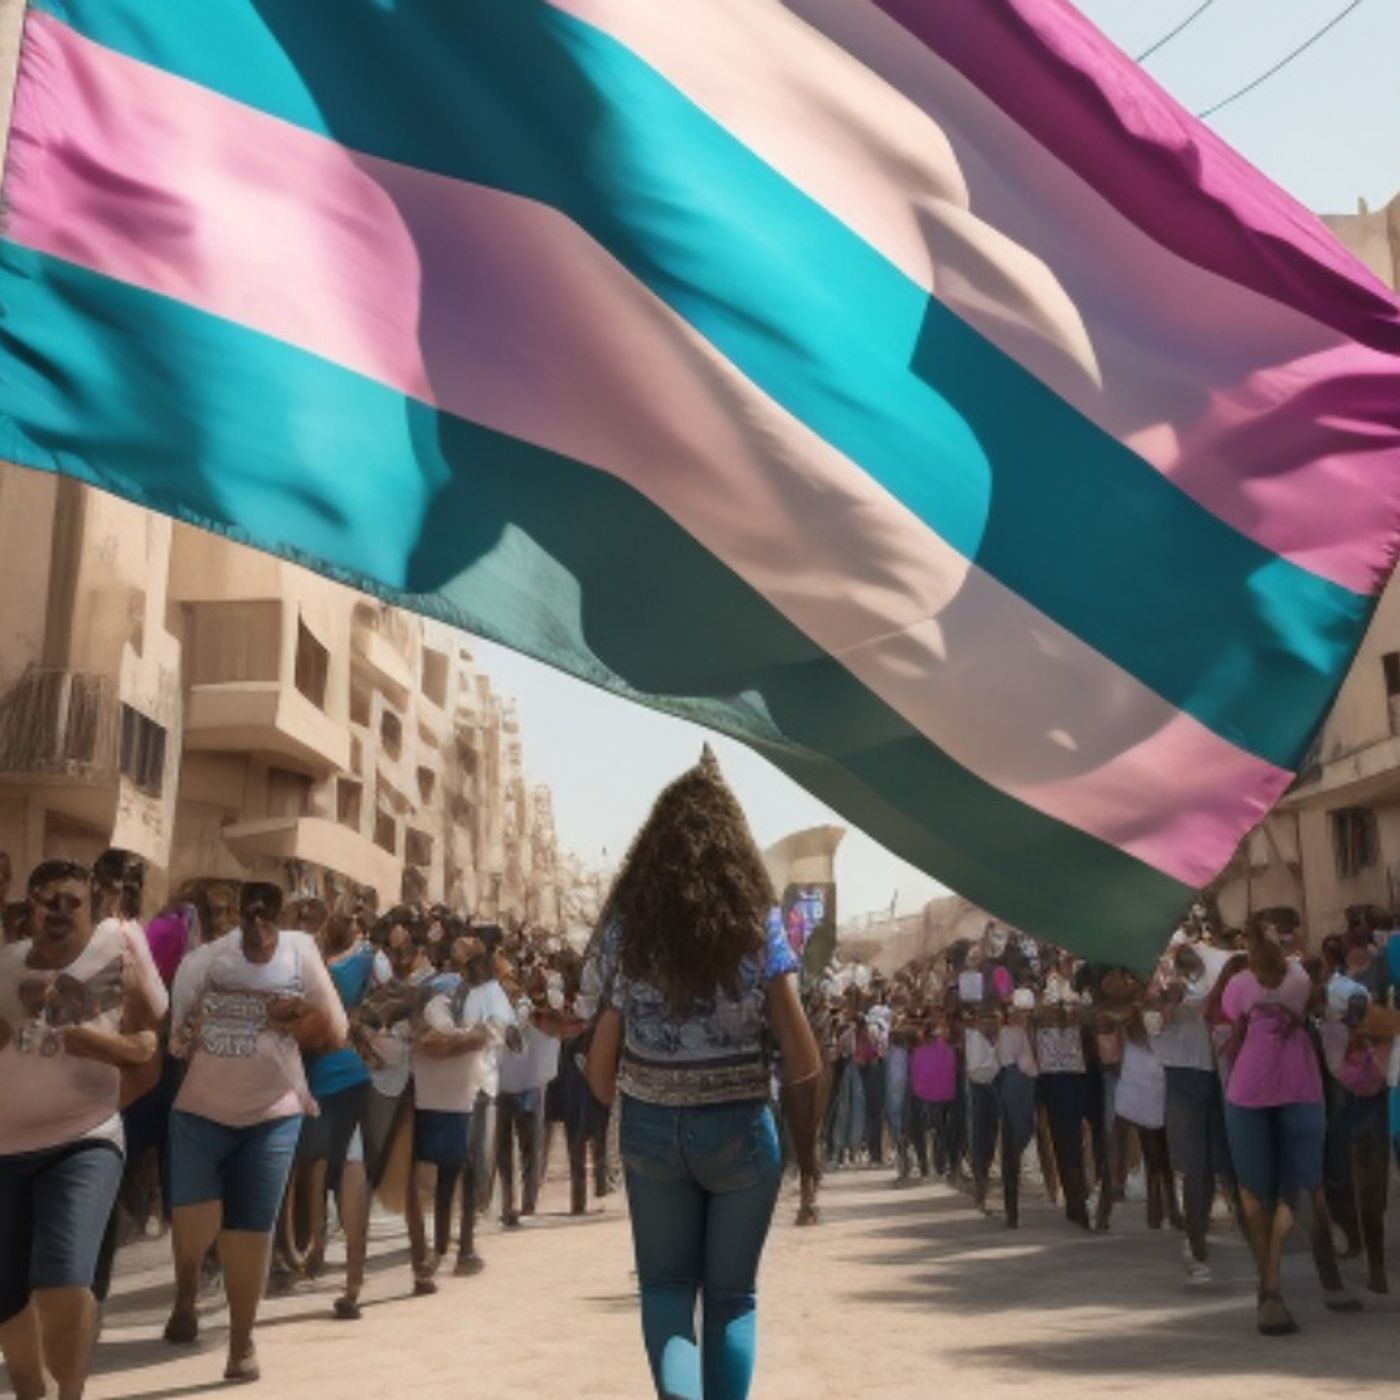 Israel Ambassador stands for Trans Rights